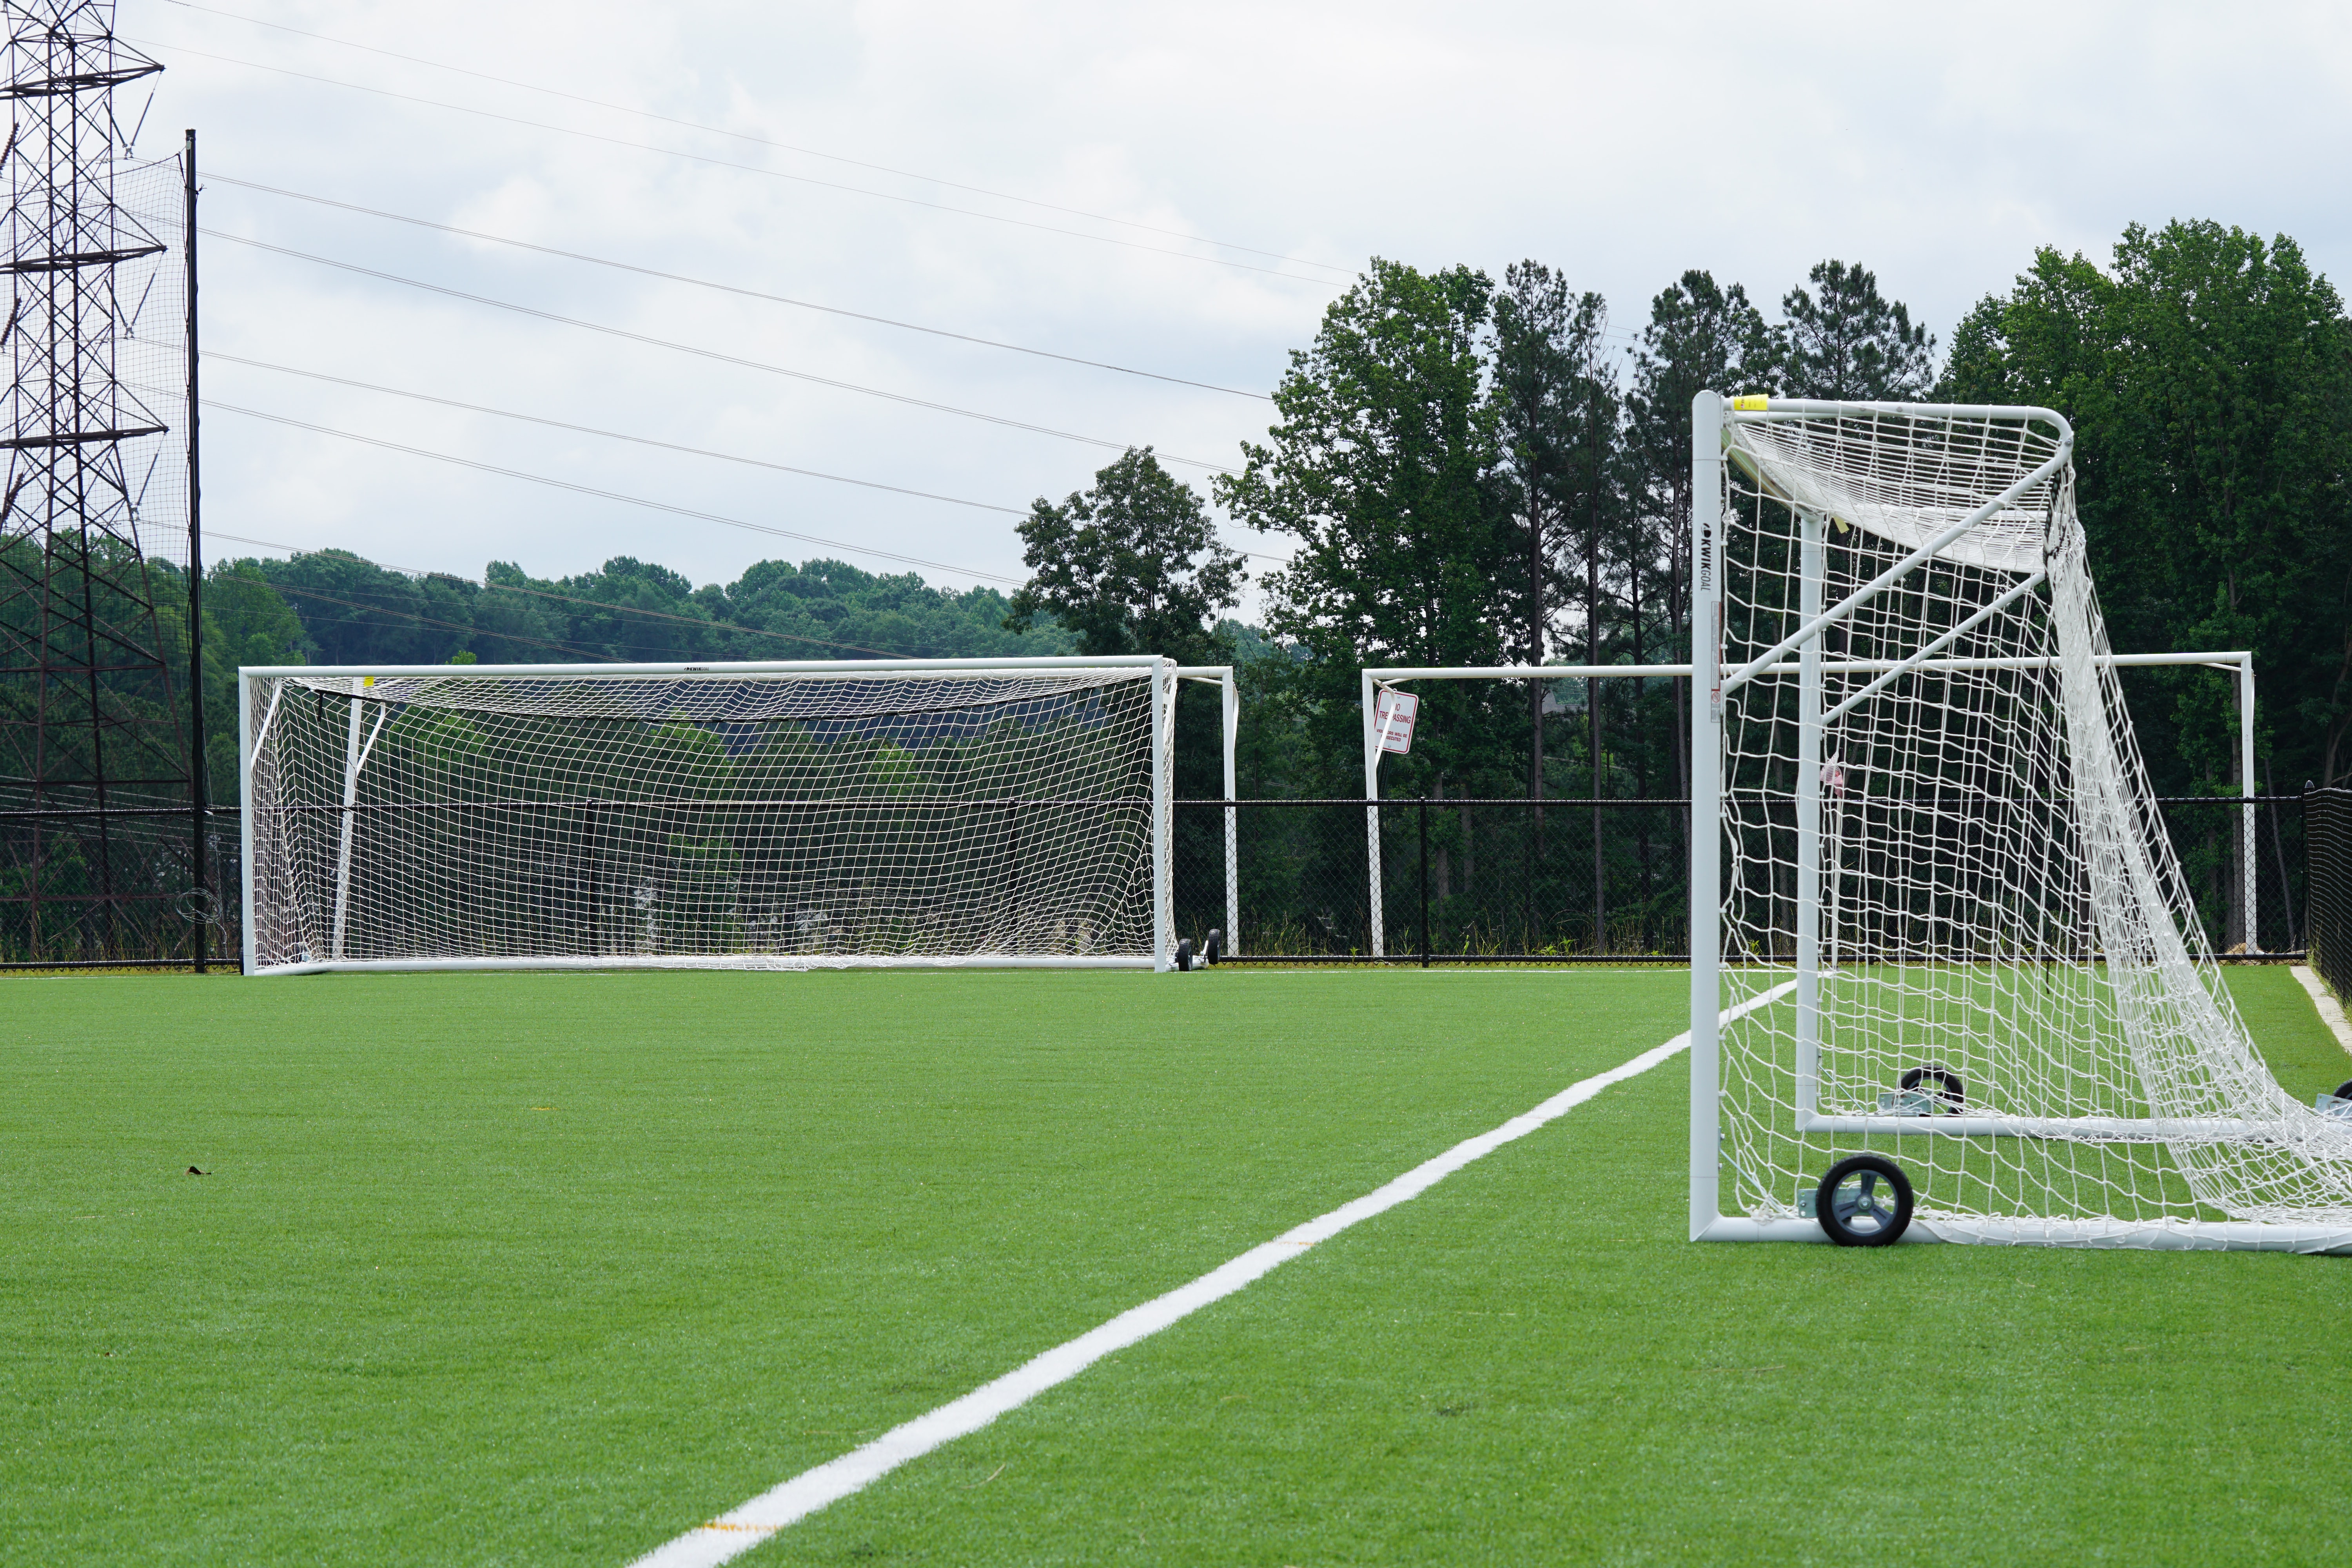 Regulation Full type of soccer field at 885 per hour